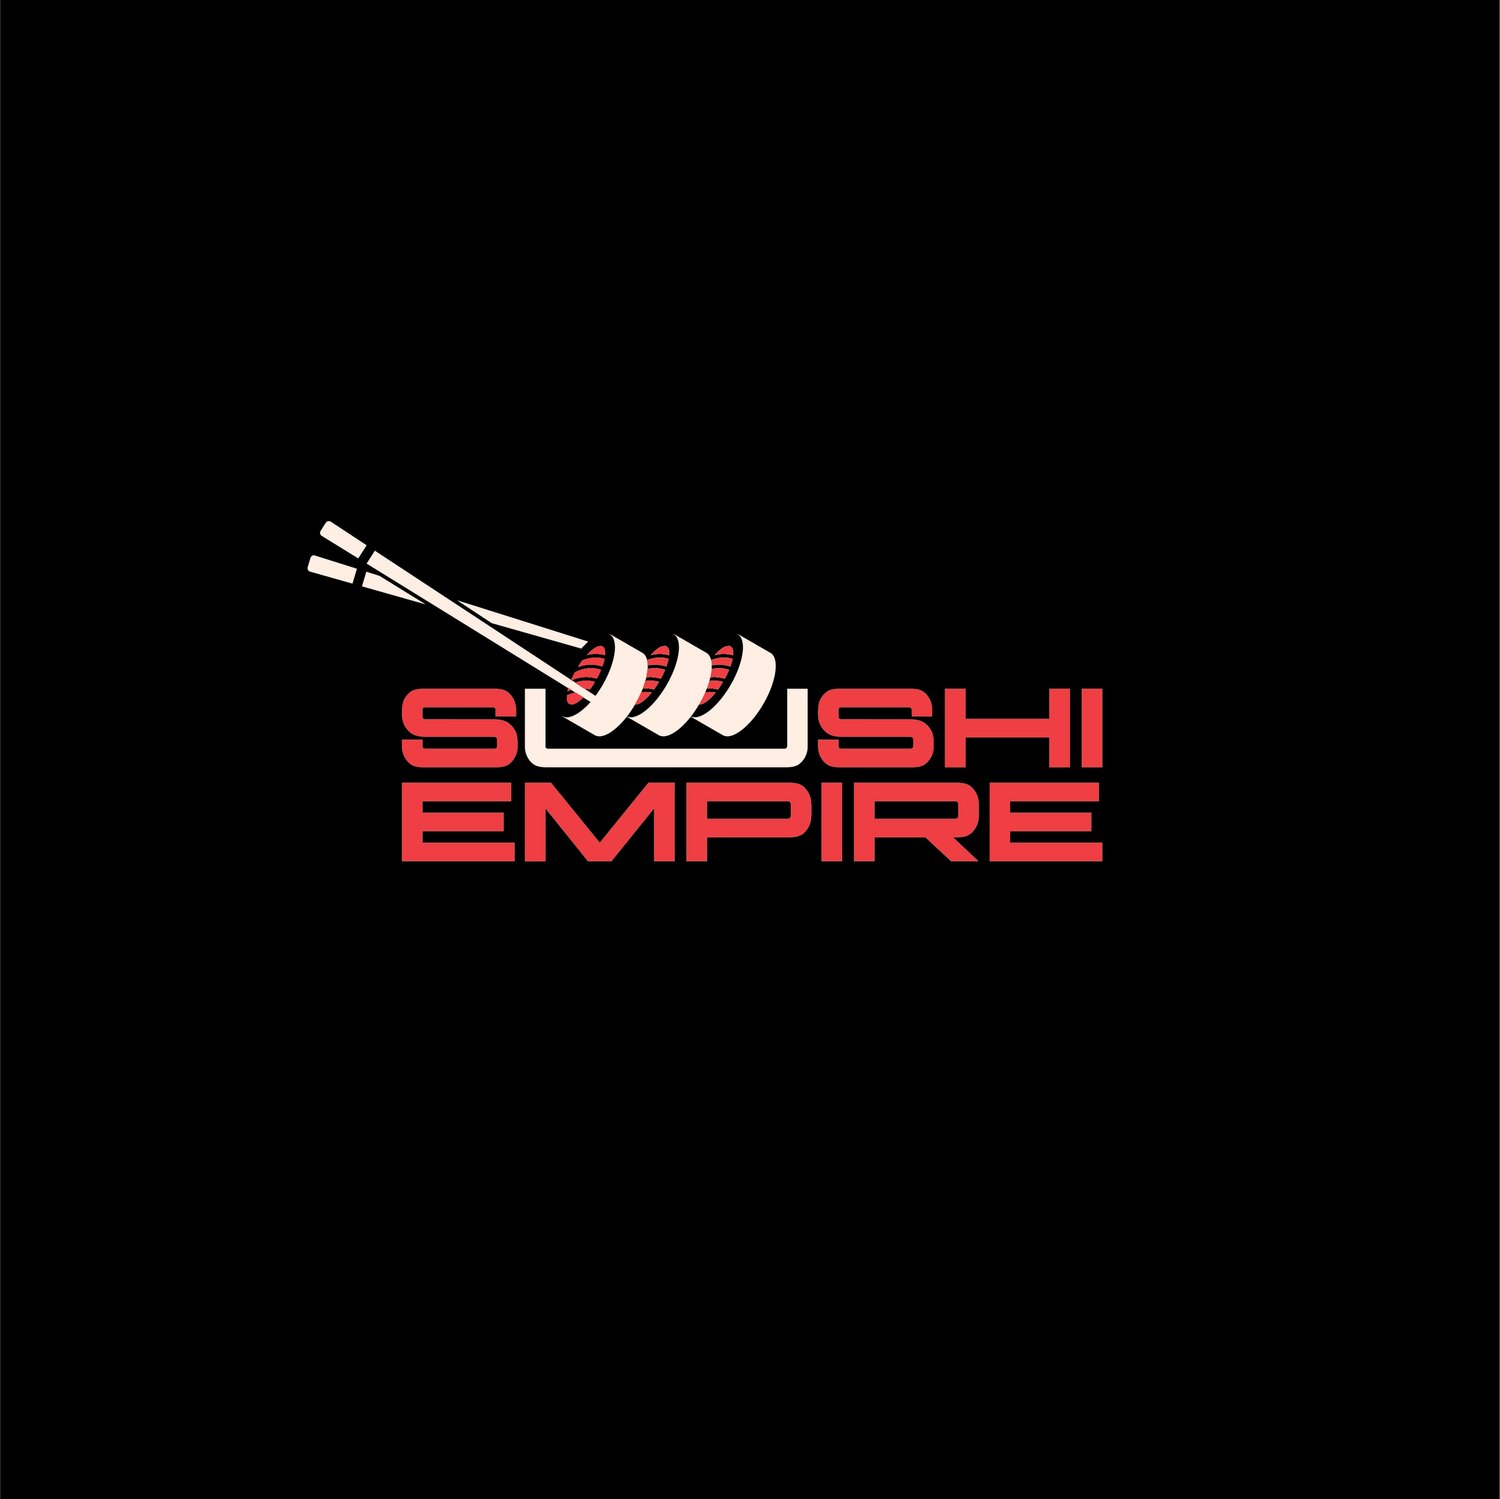 Sushi Empire